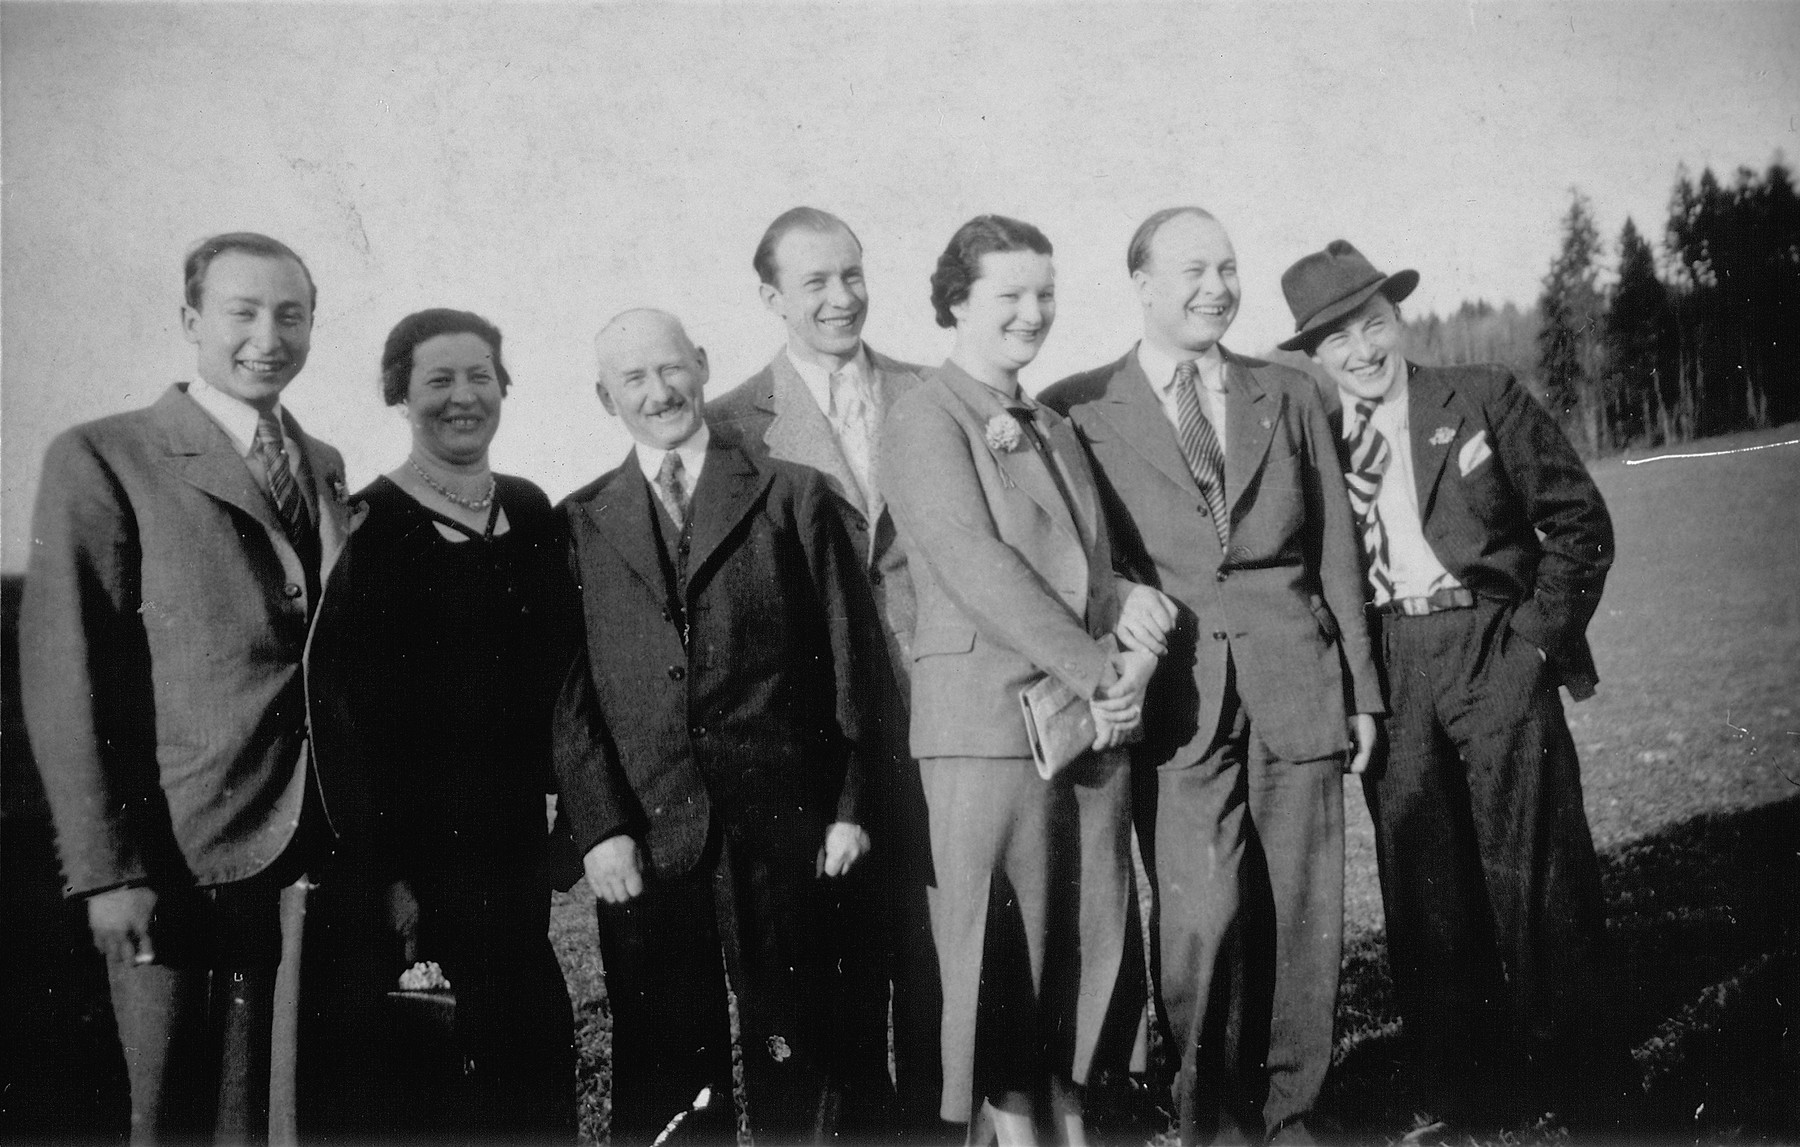 The Blechner family, a Polish-born Jewish family in Germany, poses outside.  

Left to right are Salo, Mina, Markus, Oskar, Friedl, Jakob, and Leo Blechner.